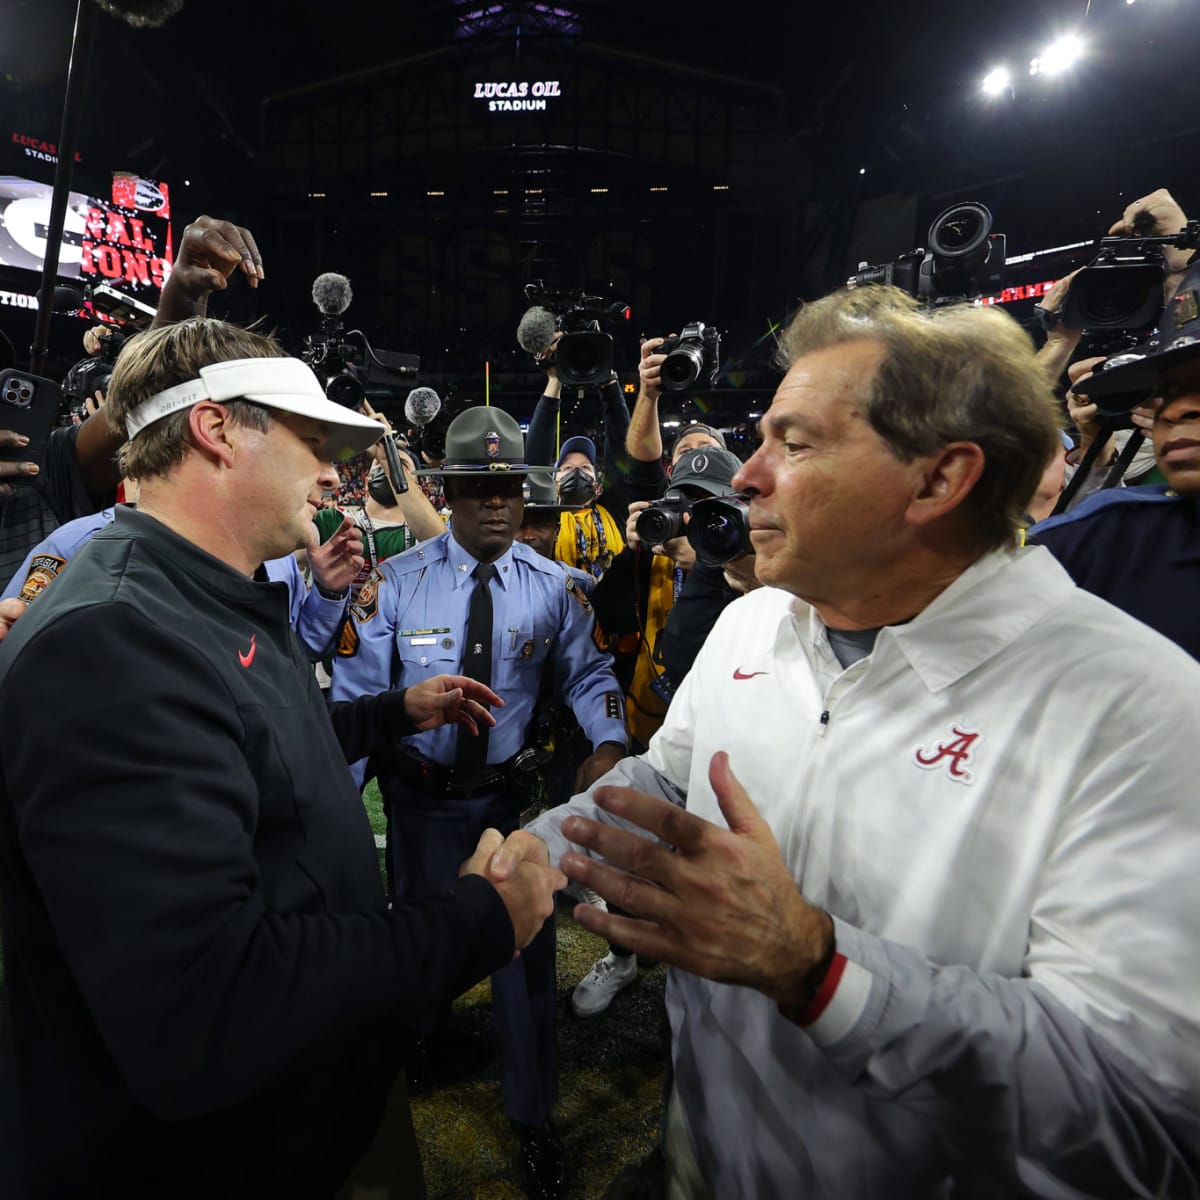 Nick Saban shares how Kirby Smart hired Dan Lanning before Alabama